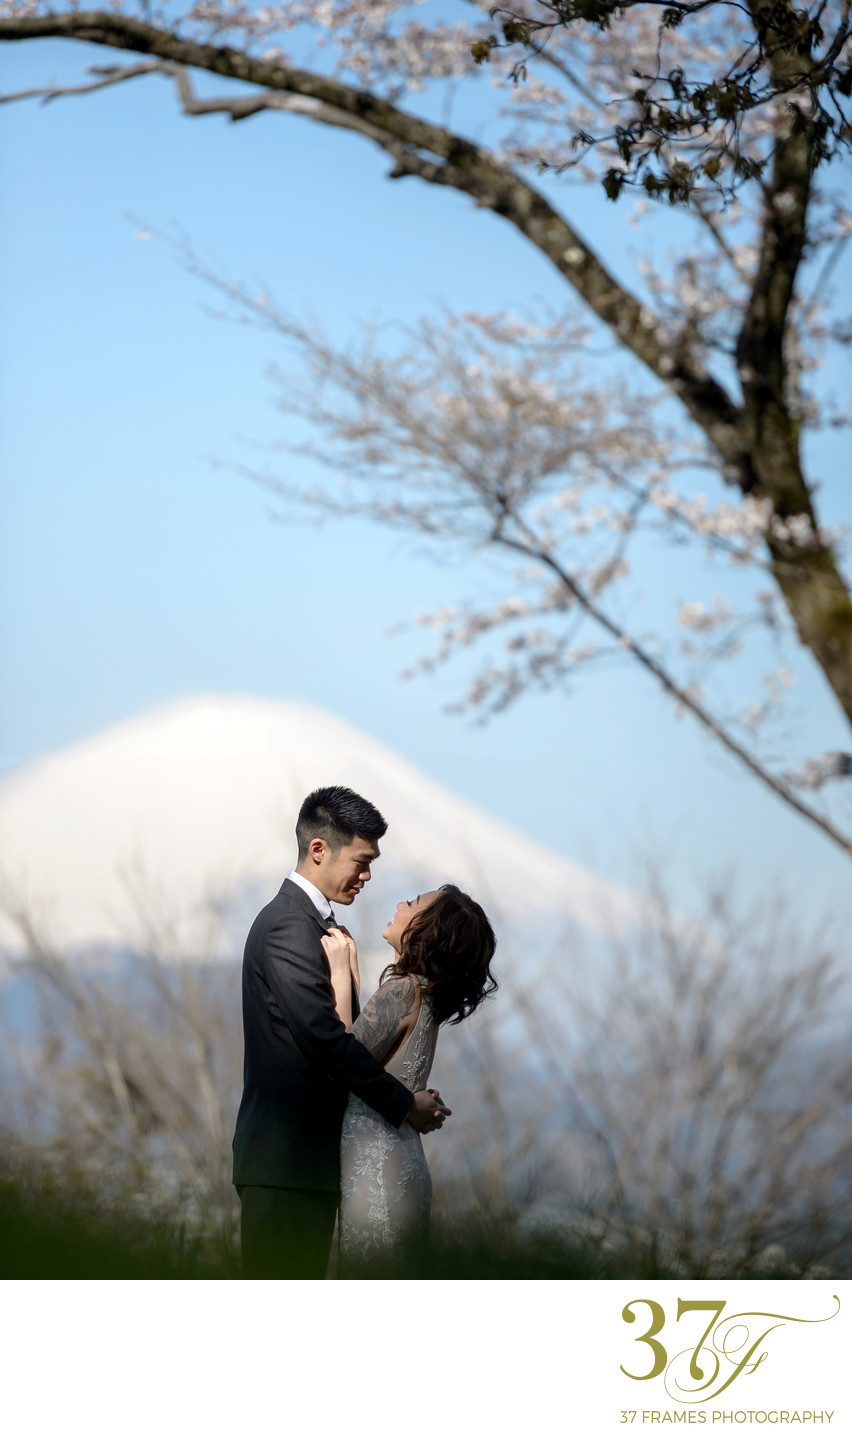 Destination Weddings in Japan Beyond Wildest Dreams
